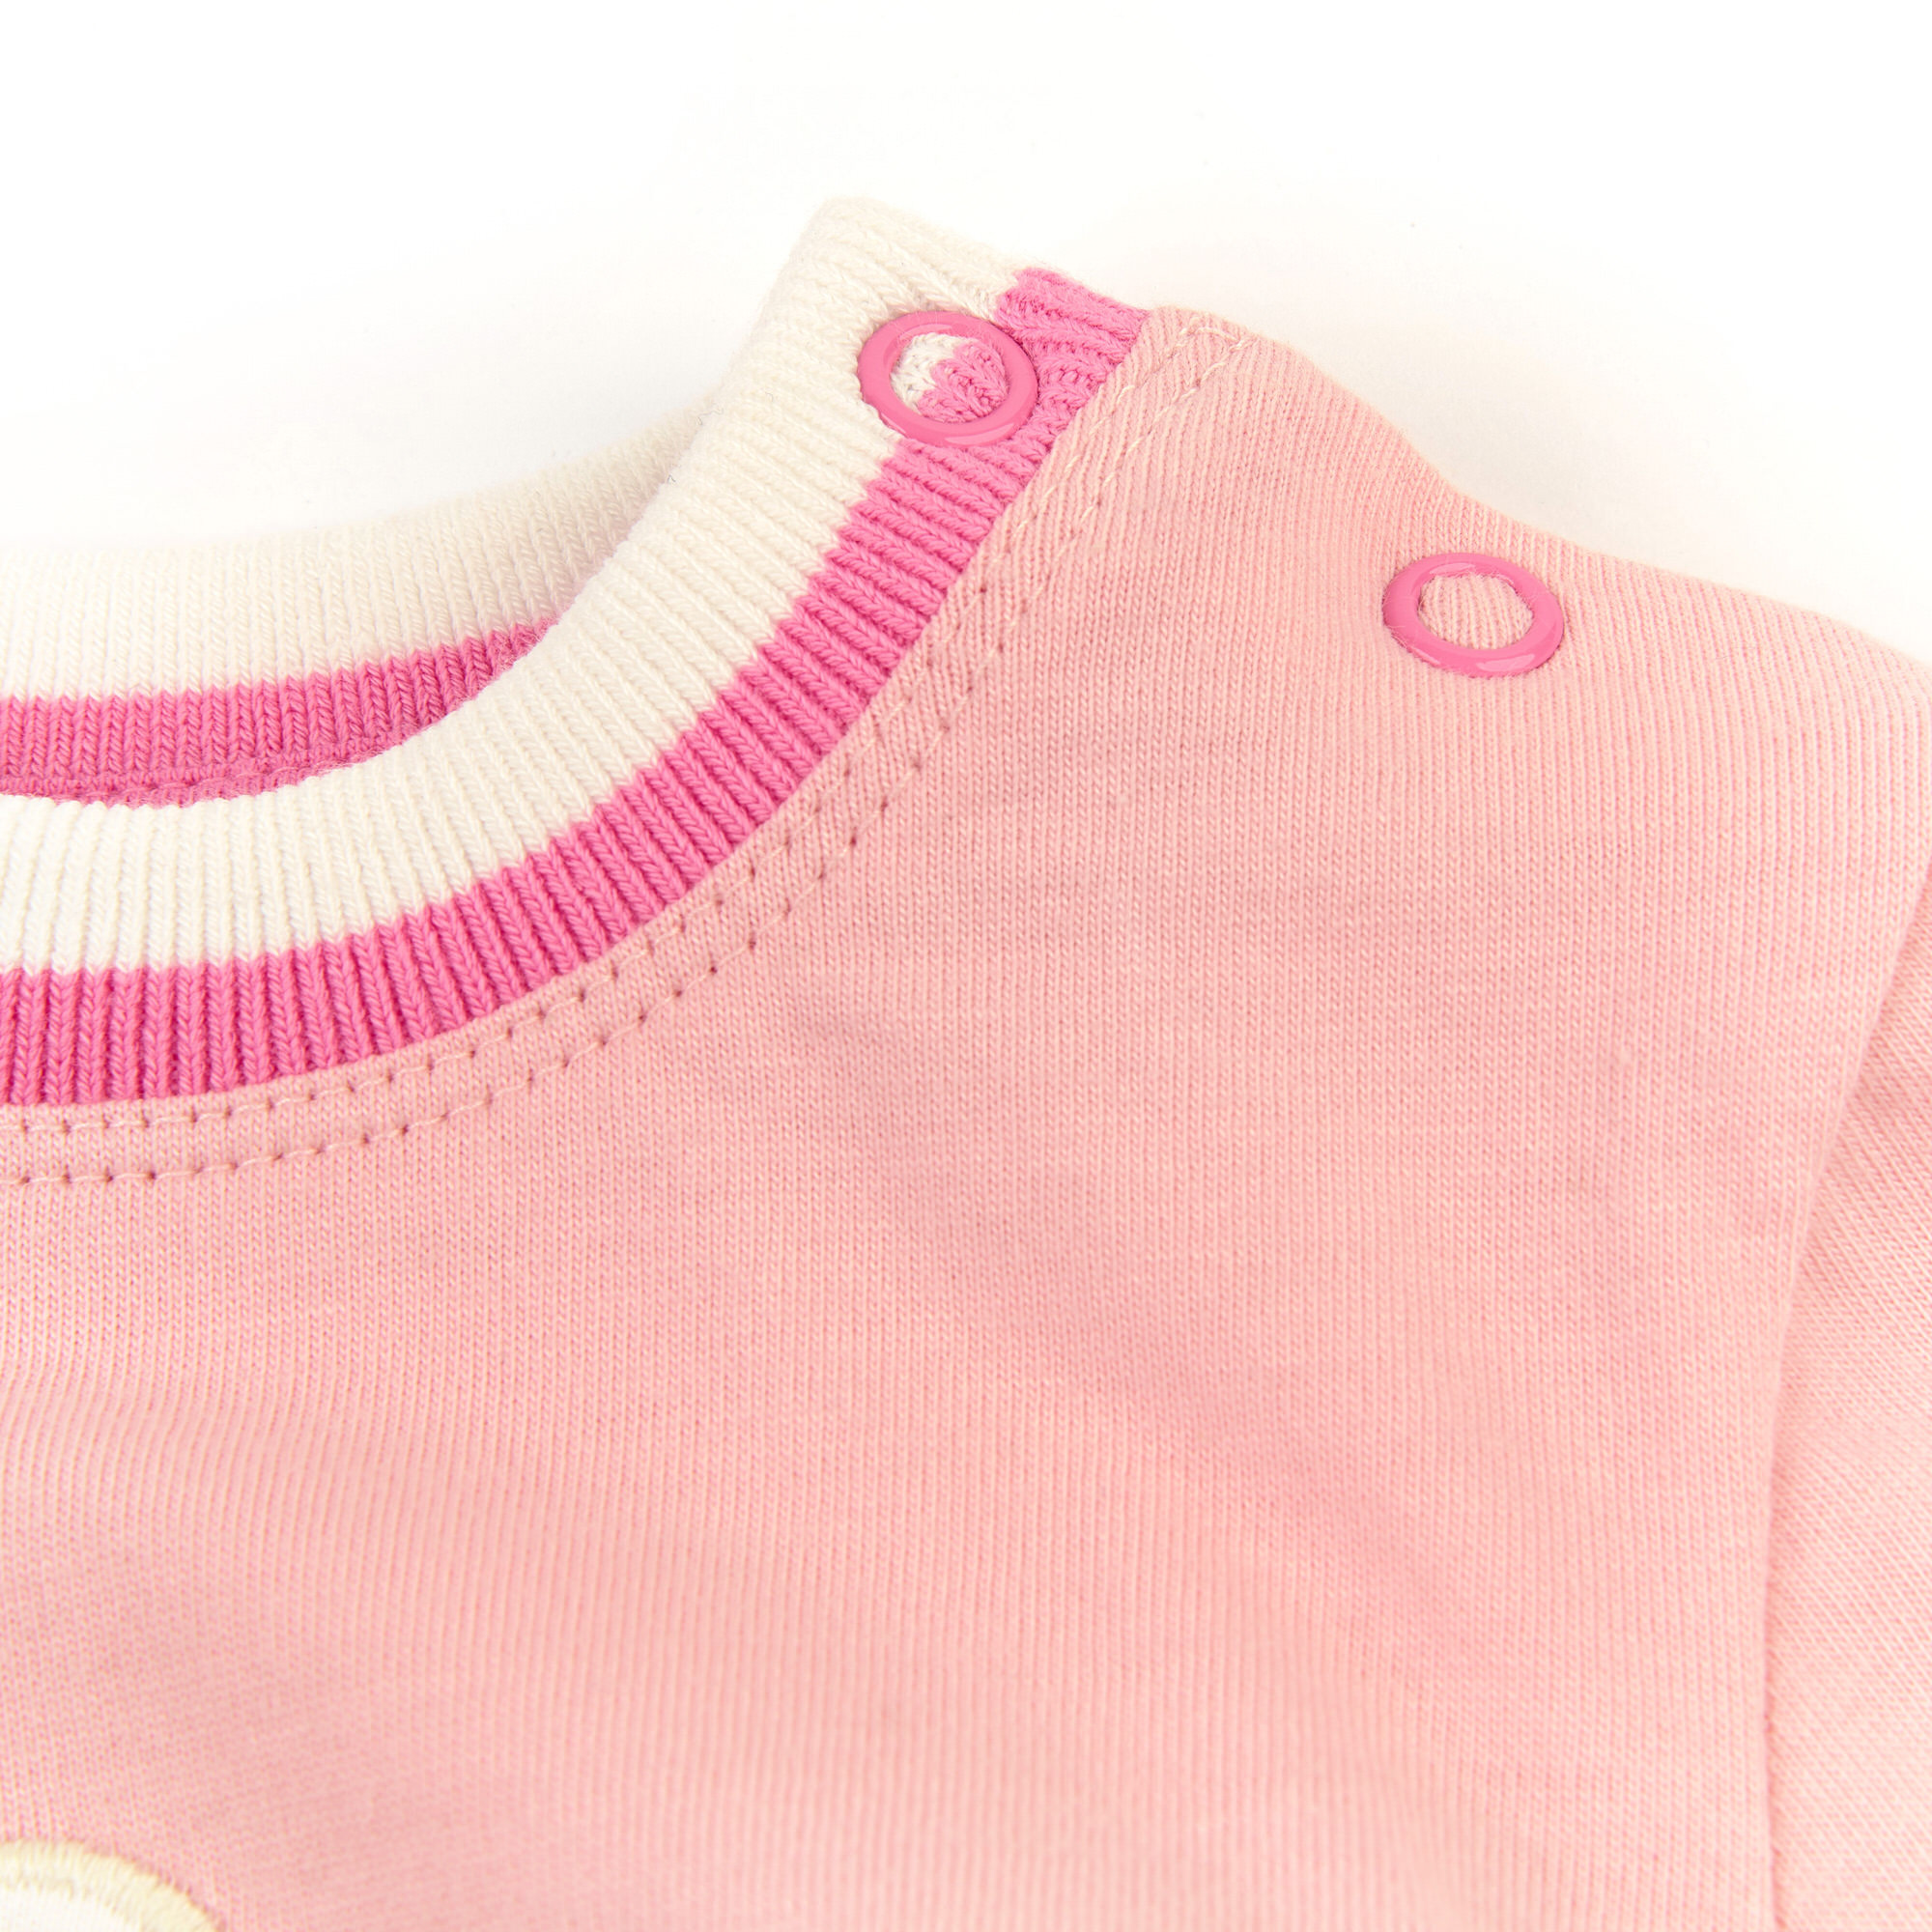 Baby girl T-shirt giraffe, pastel pink